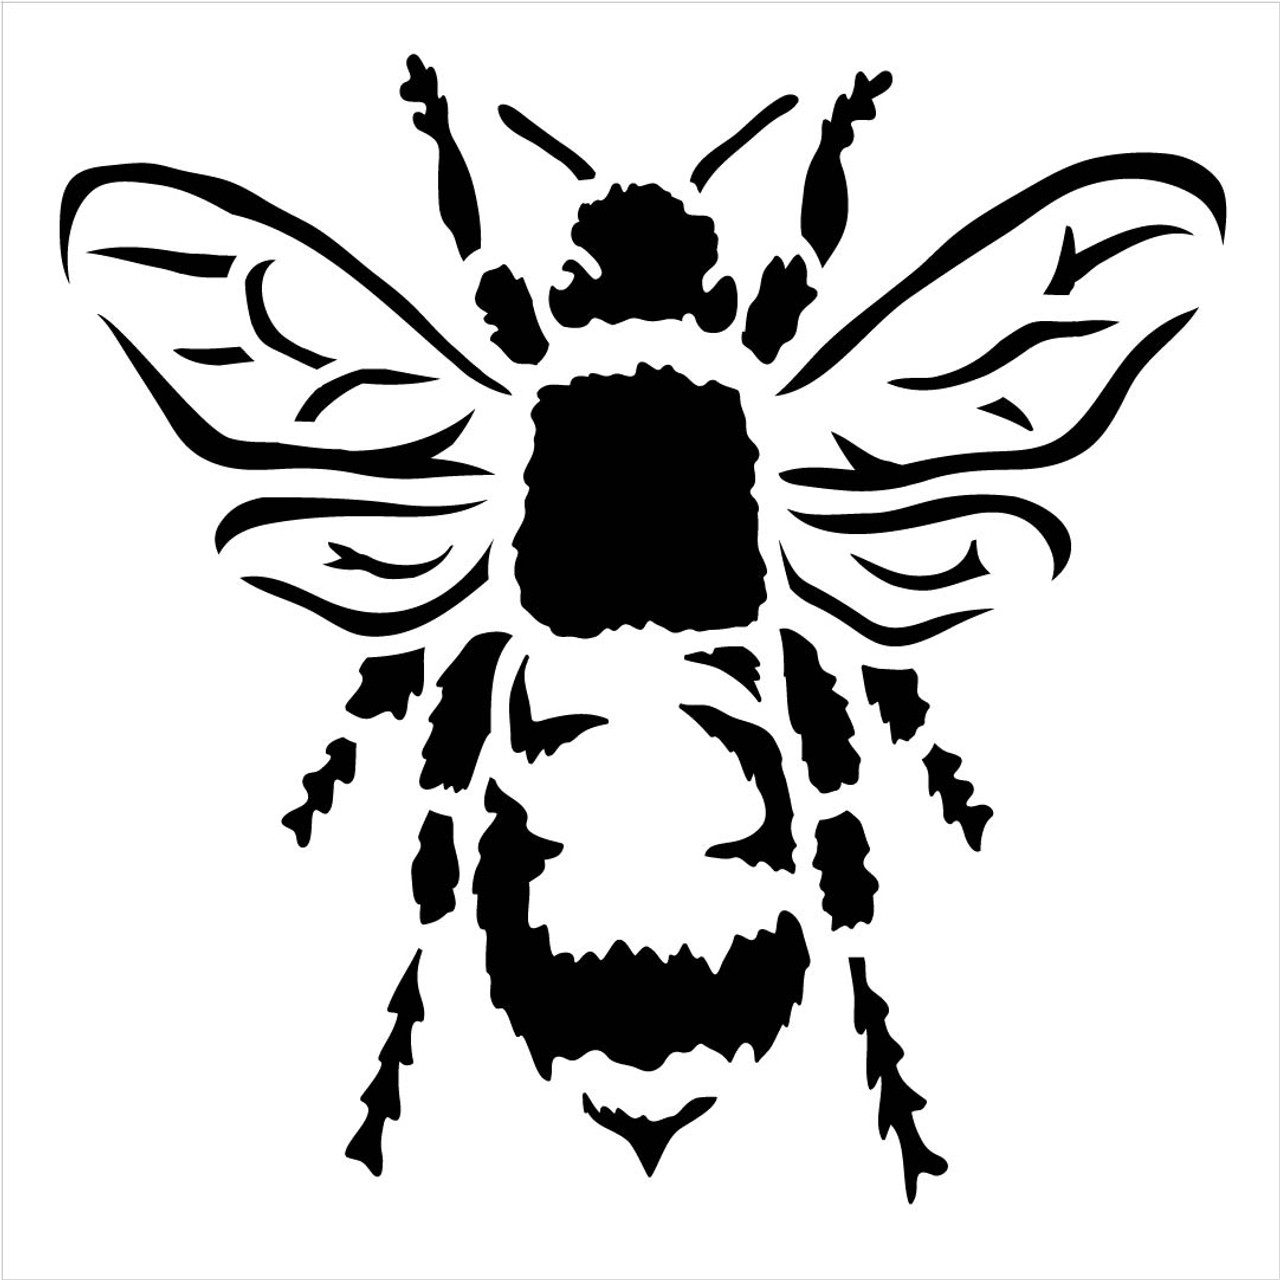 Basic Bee - Art Stencil - 4" x 4"